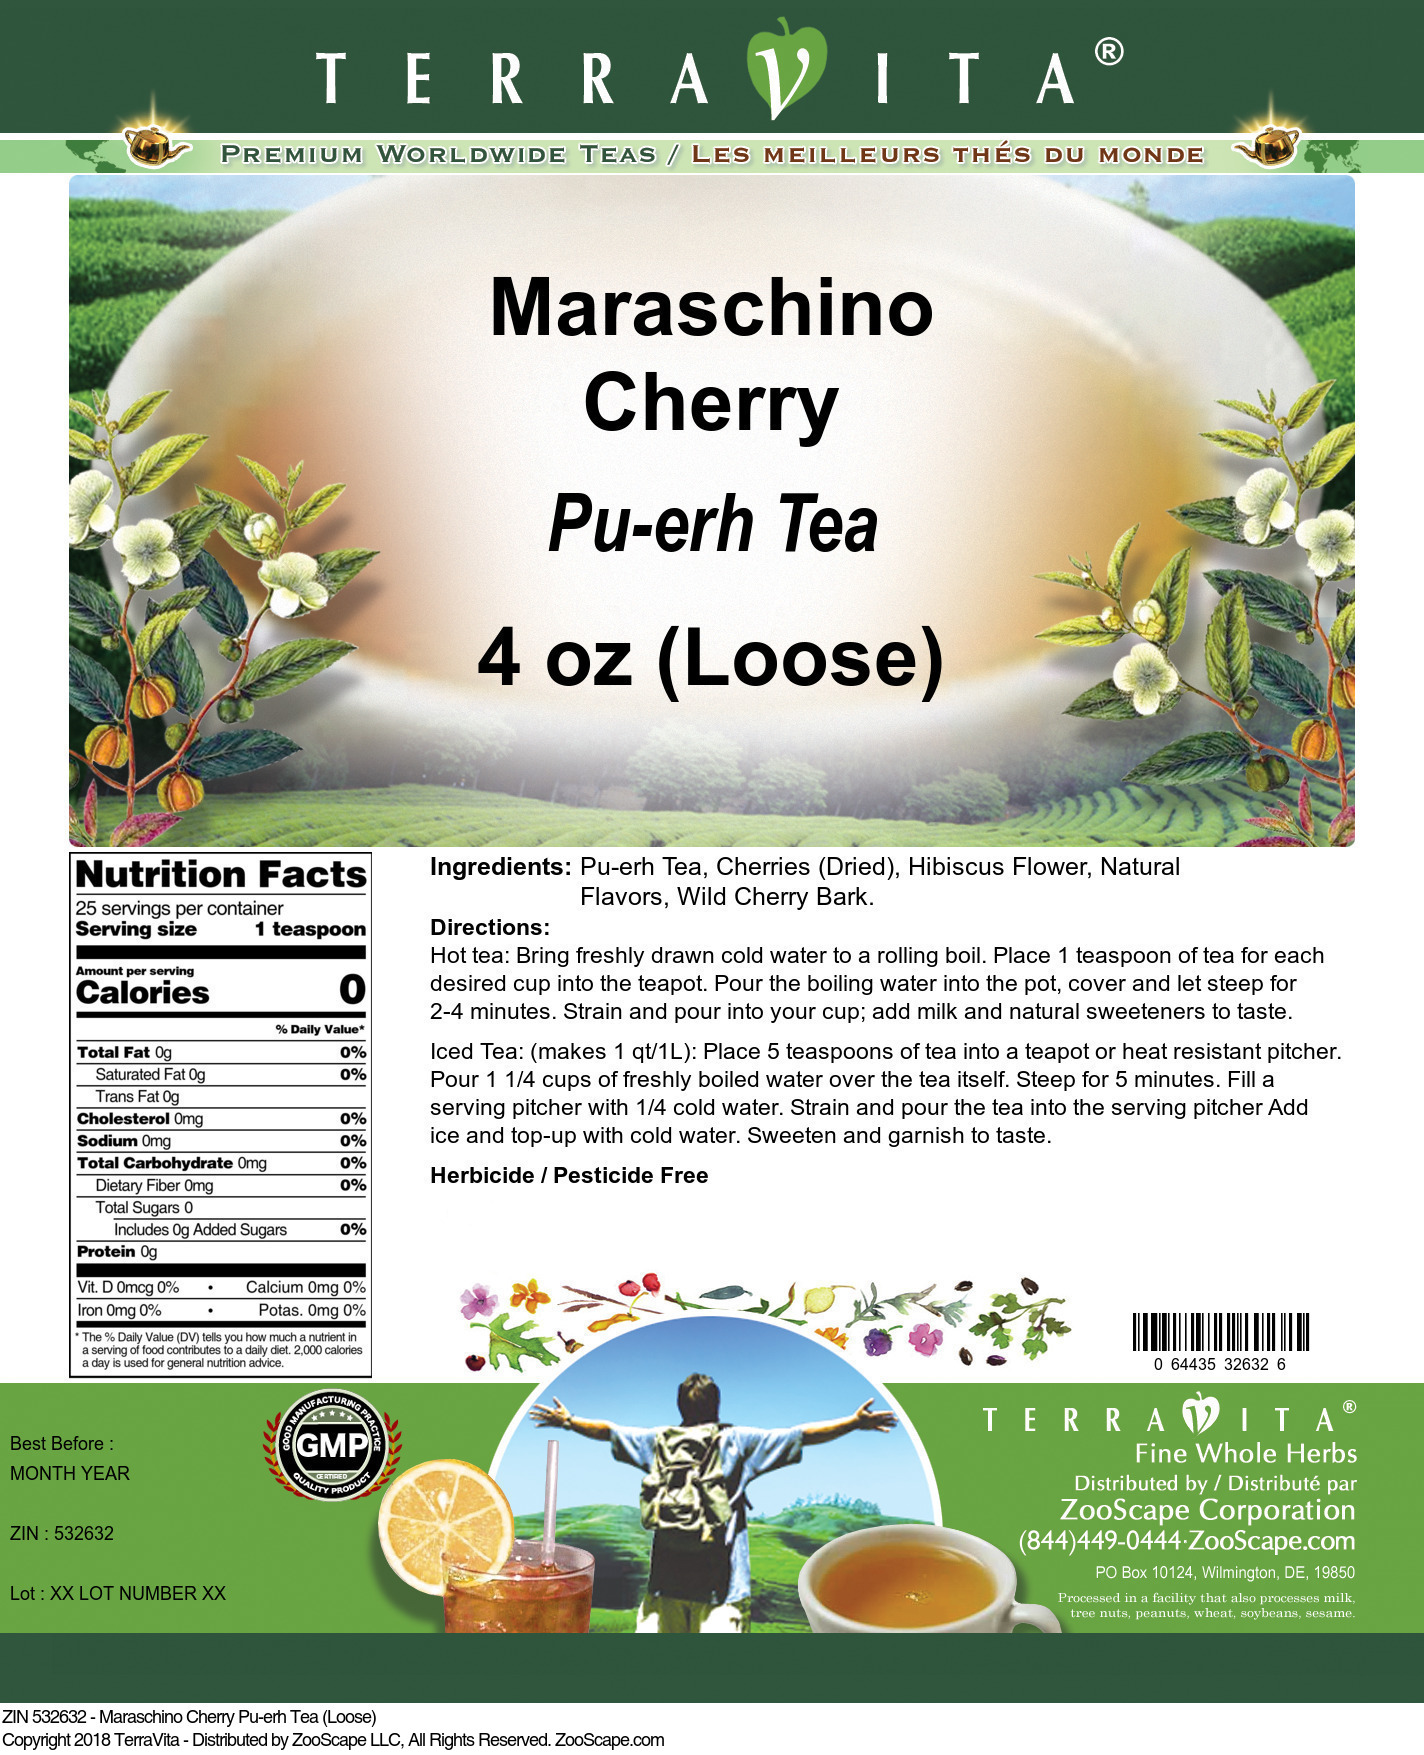 Maraschino Cherry Pu-erh Tea (Loose) - Label